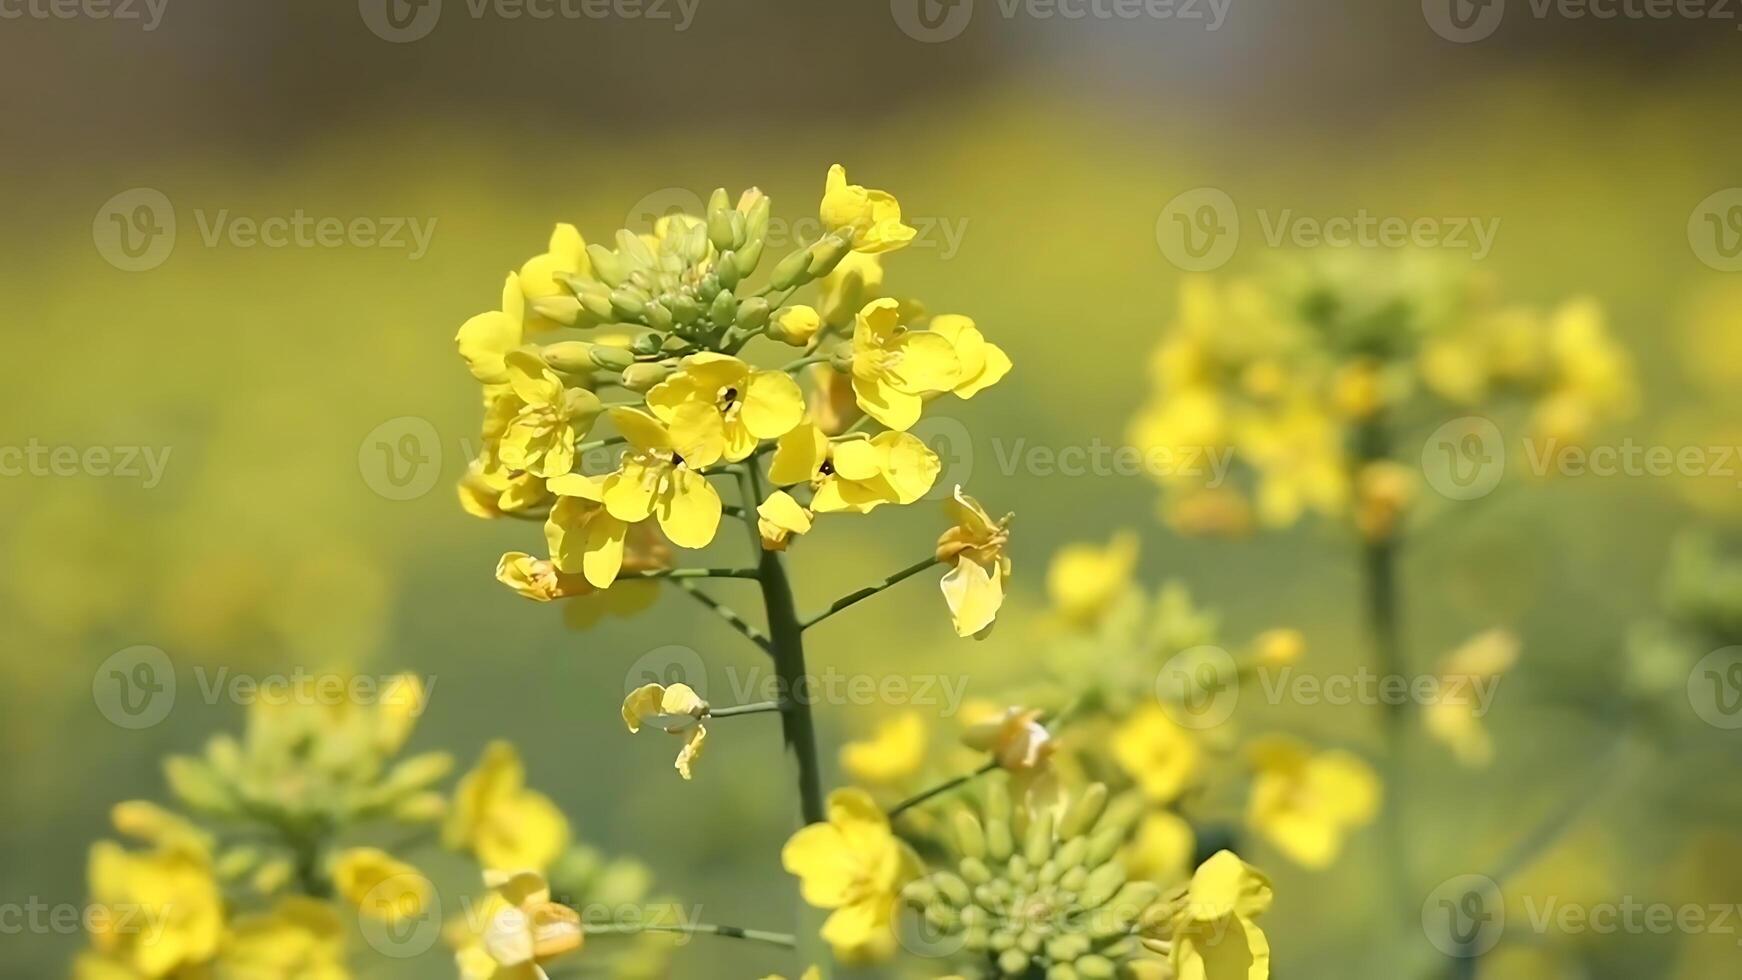 Mustard flowers in a garden in springtime, stock photo. photo